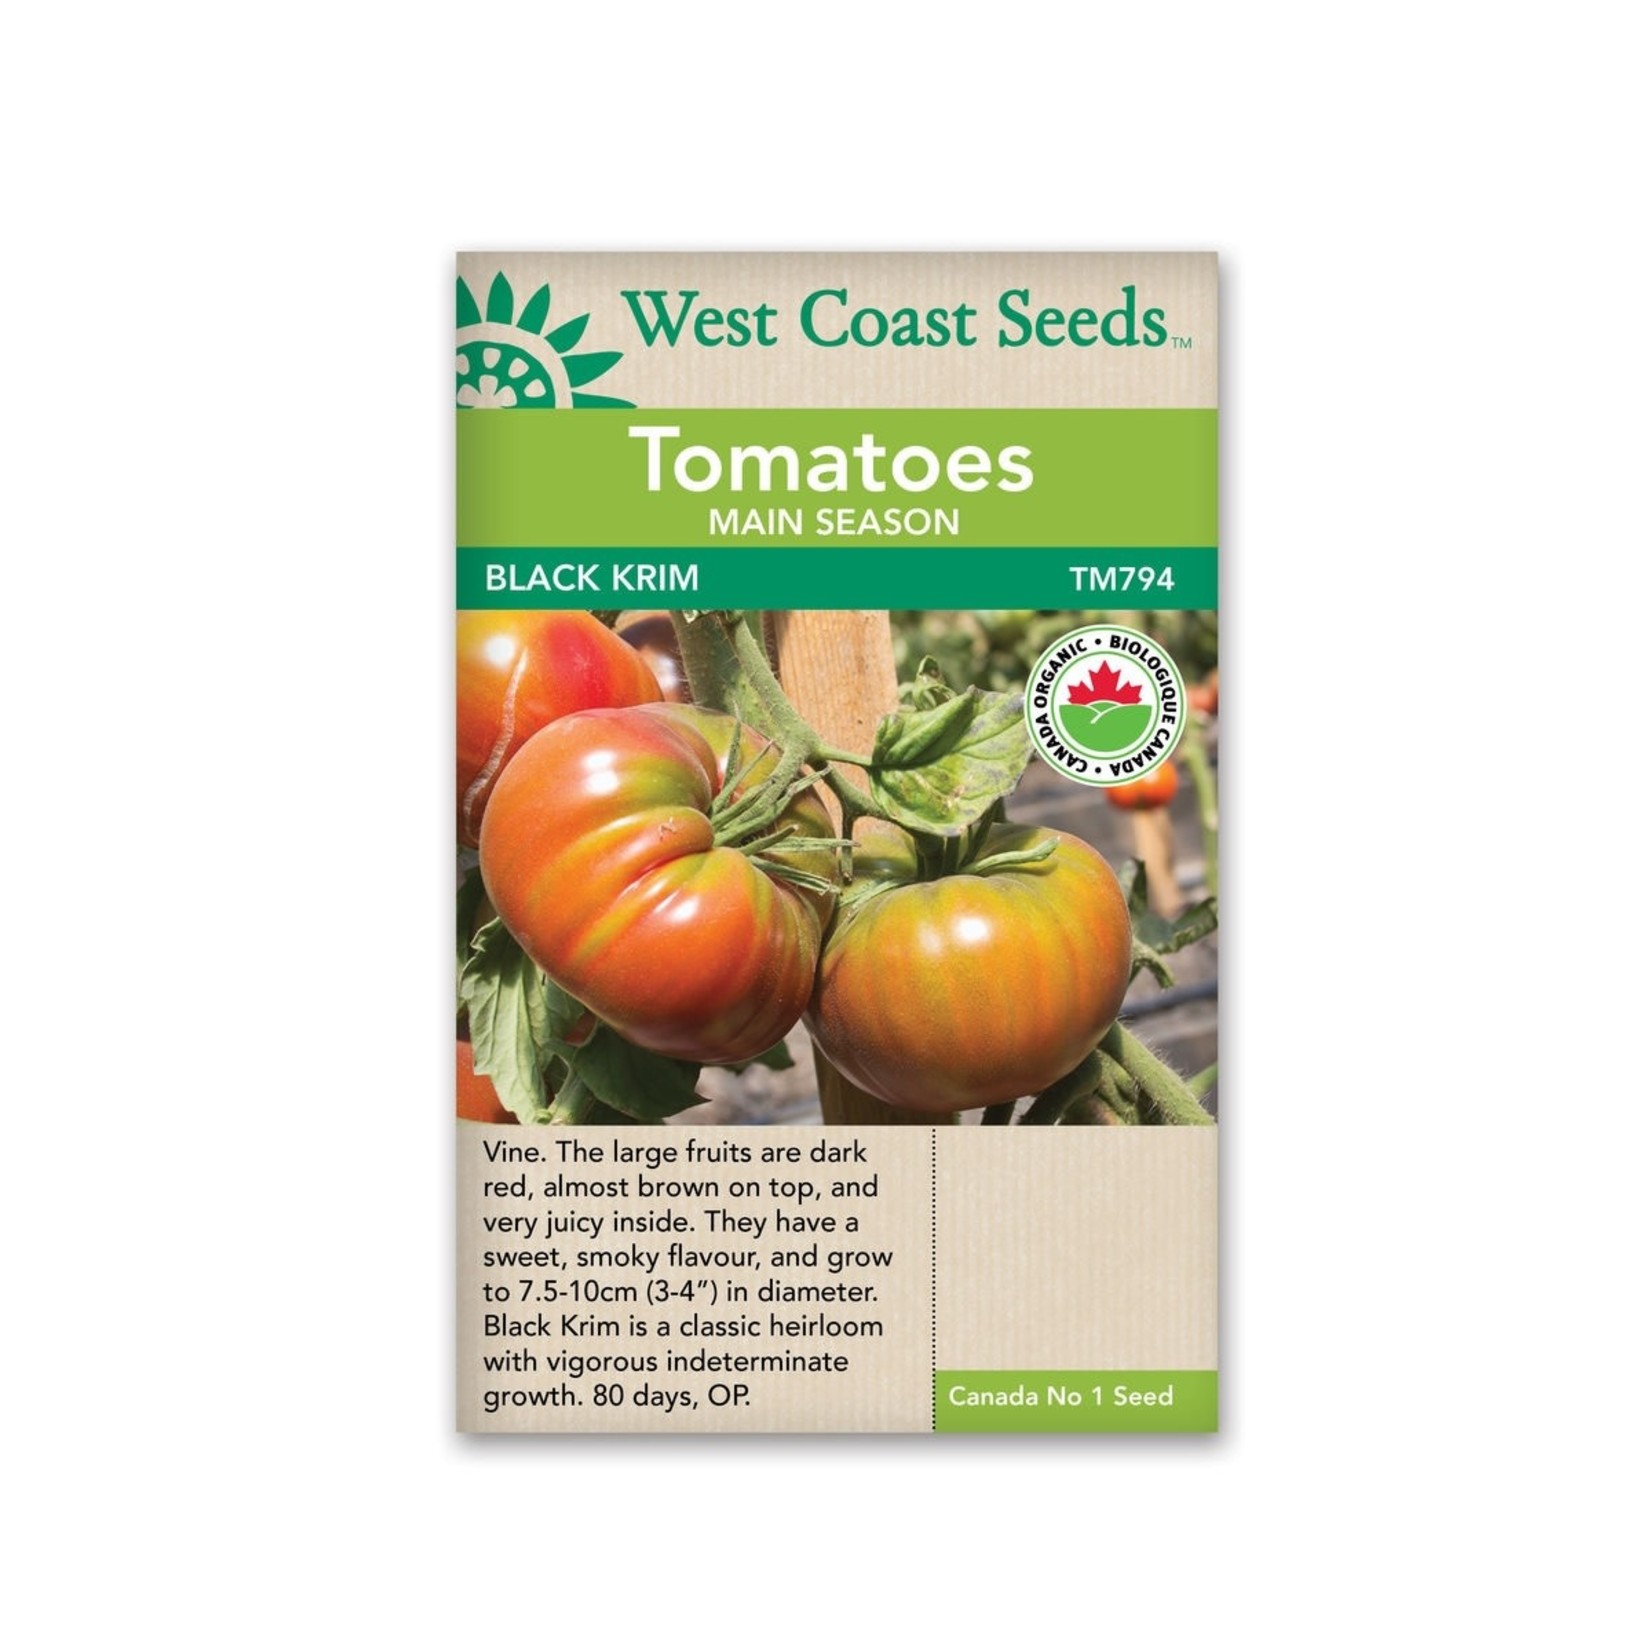 West Coast Seeds Tomatoes-Black Krim Certified Organic